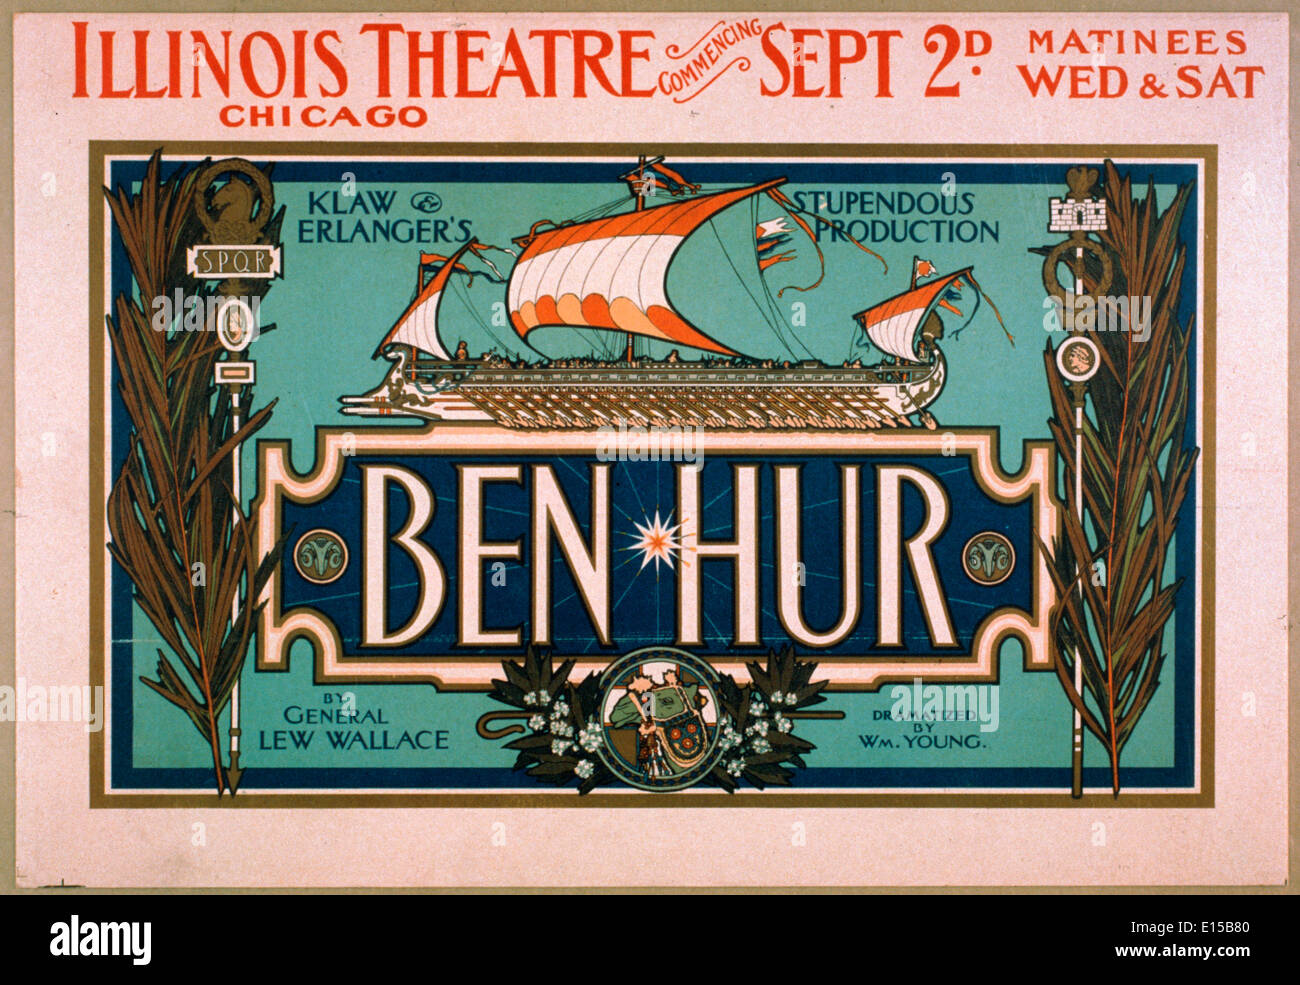 Ben-Hur Klaw & Erlanger's stupendous production, advertising poster, circa 1901 Stock Photo